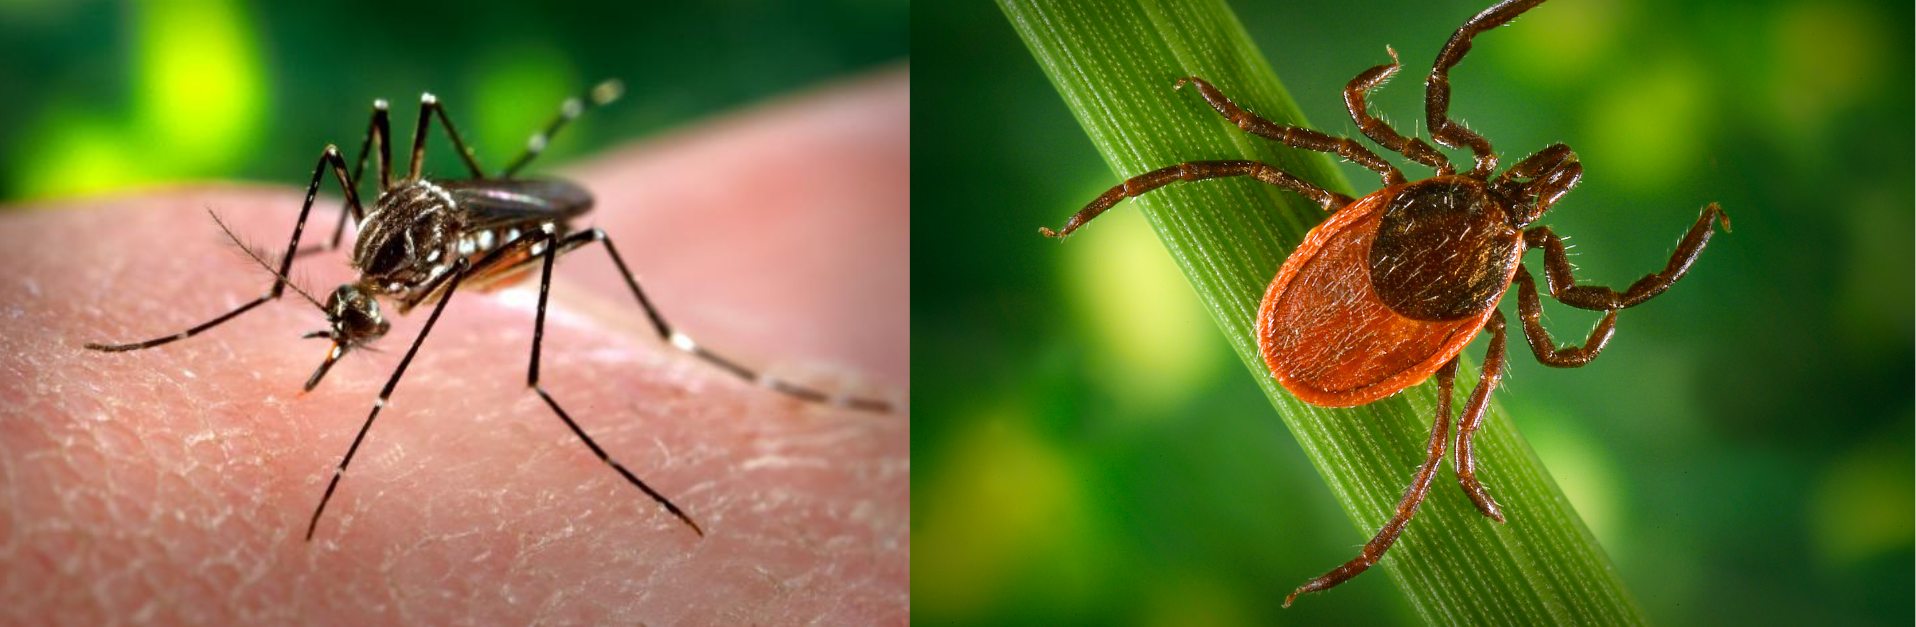 Mosquito and Tick - Disease Vectors